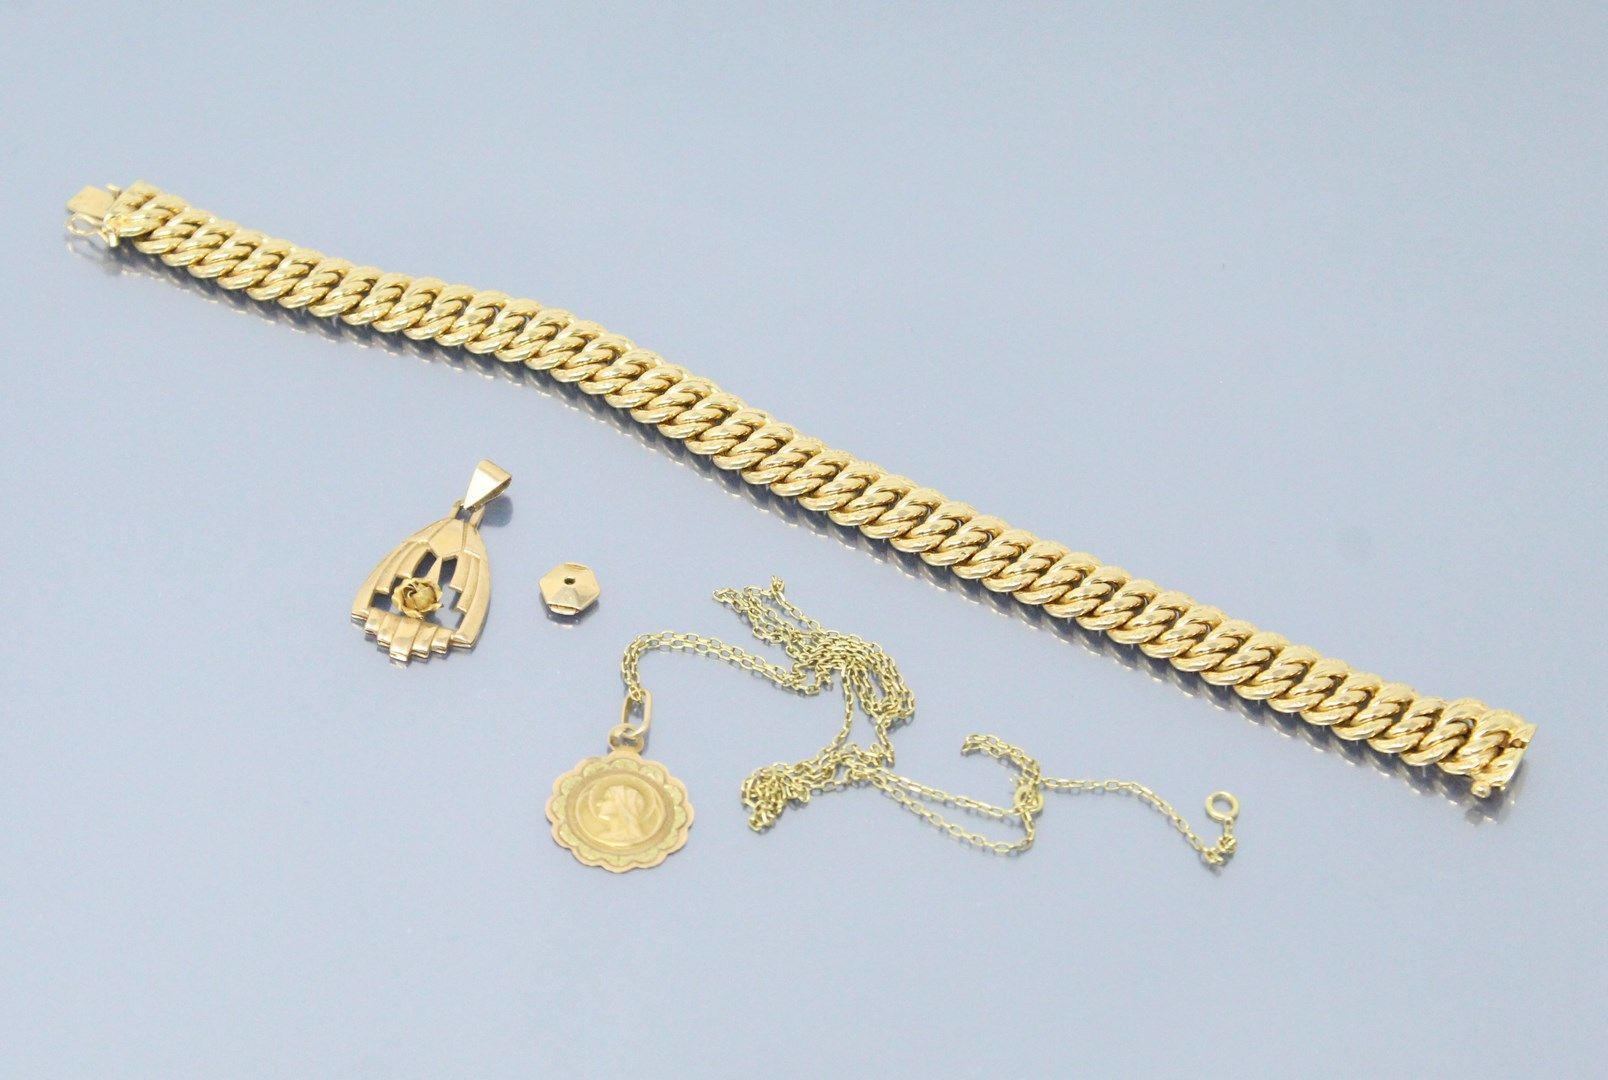 Null 18K（750）黄金拍品包括一个手镯，一条链子，一个奖章，一个吊坠和一个BO片。

重量：21.36克